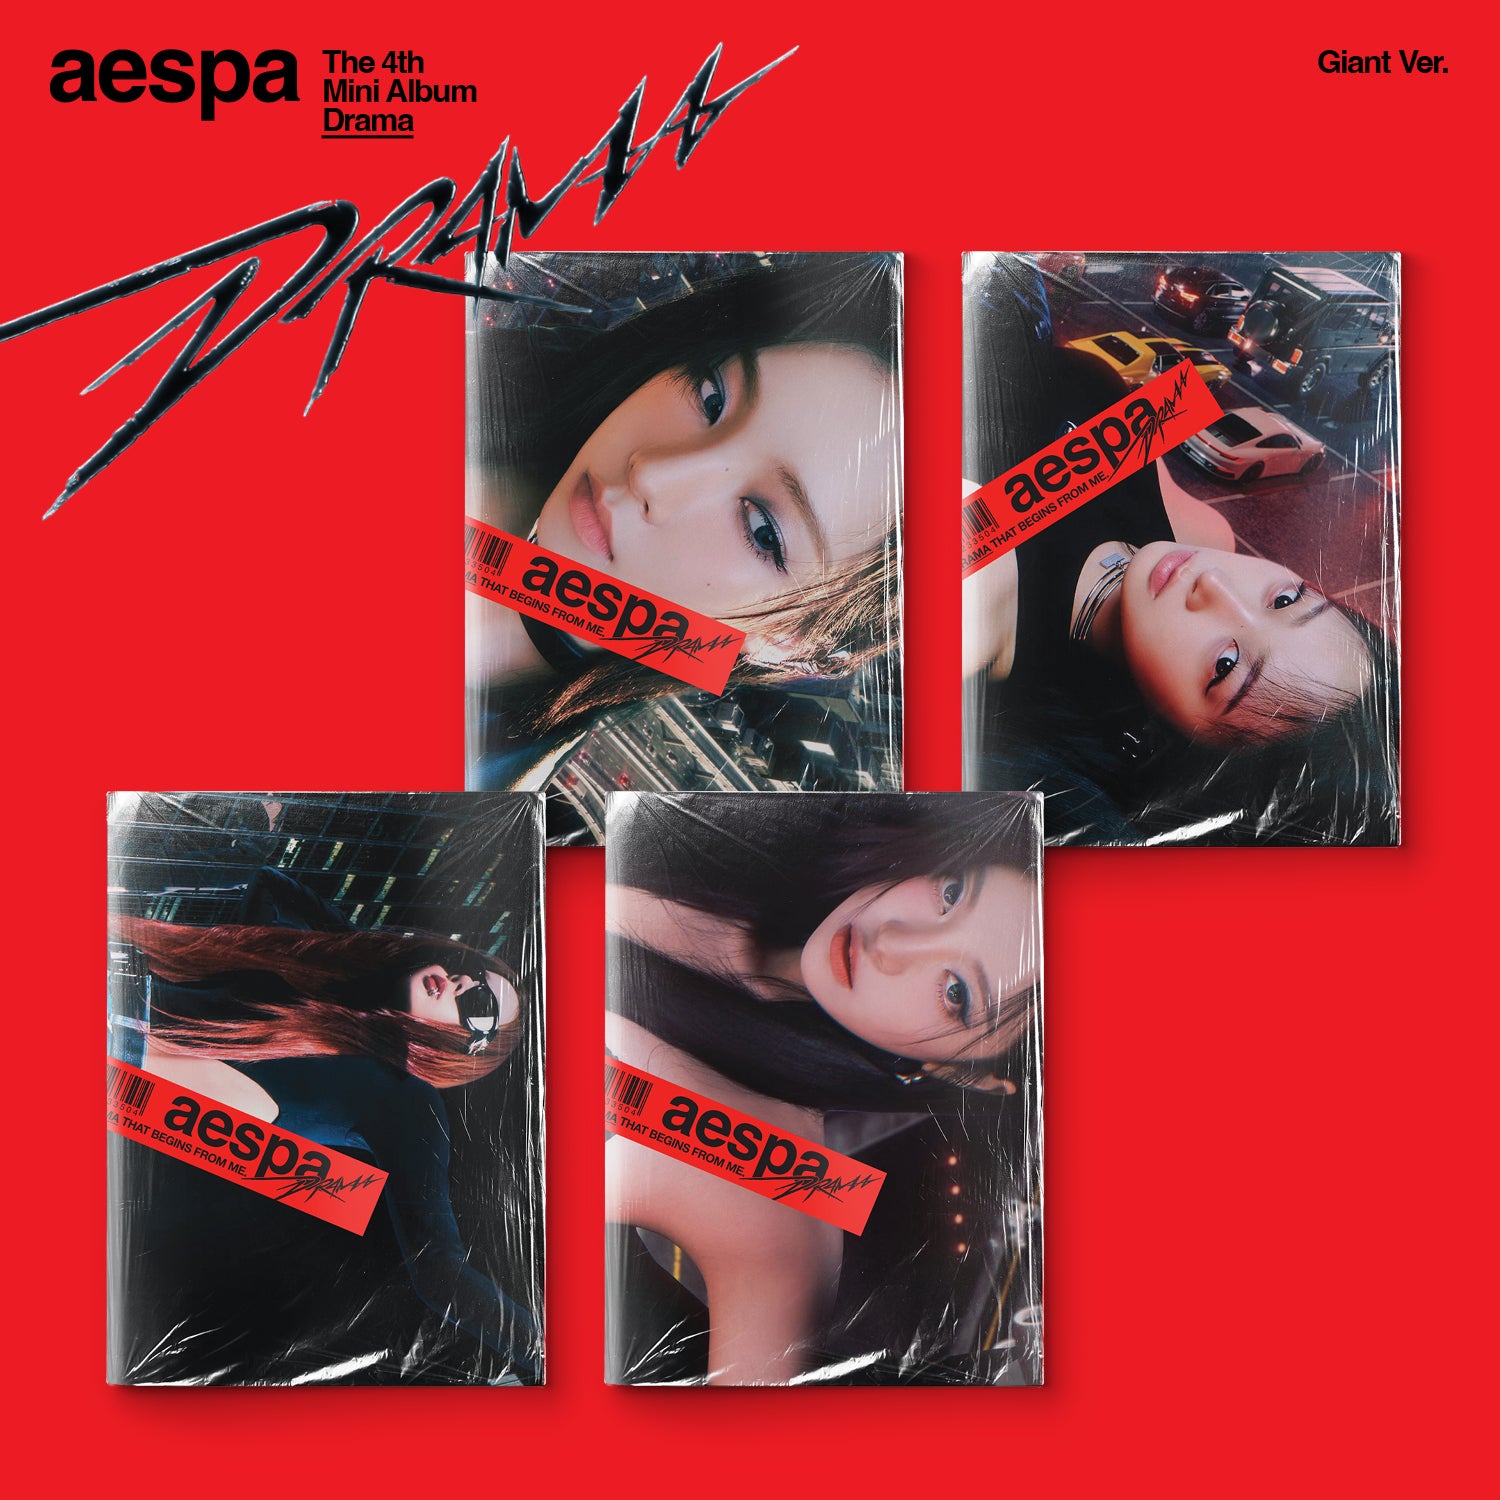 aespa - 4th Mini Album Drama (Giant Ver.)